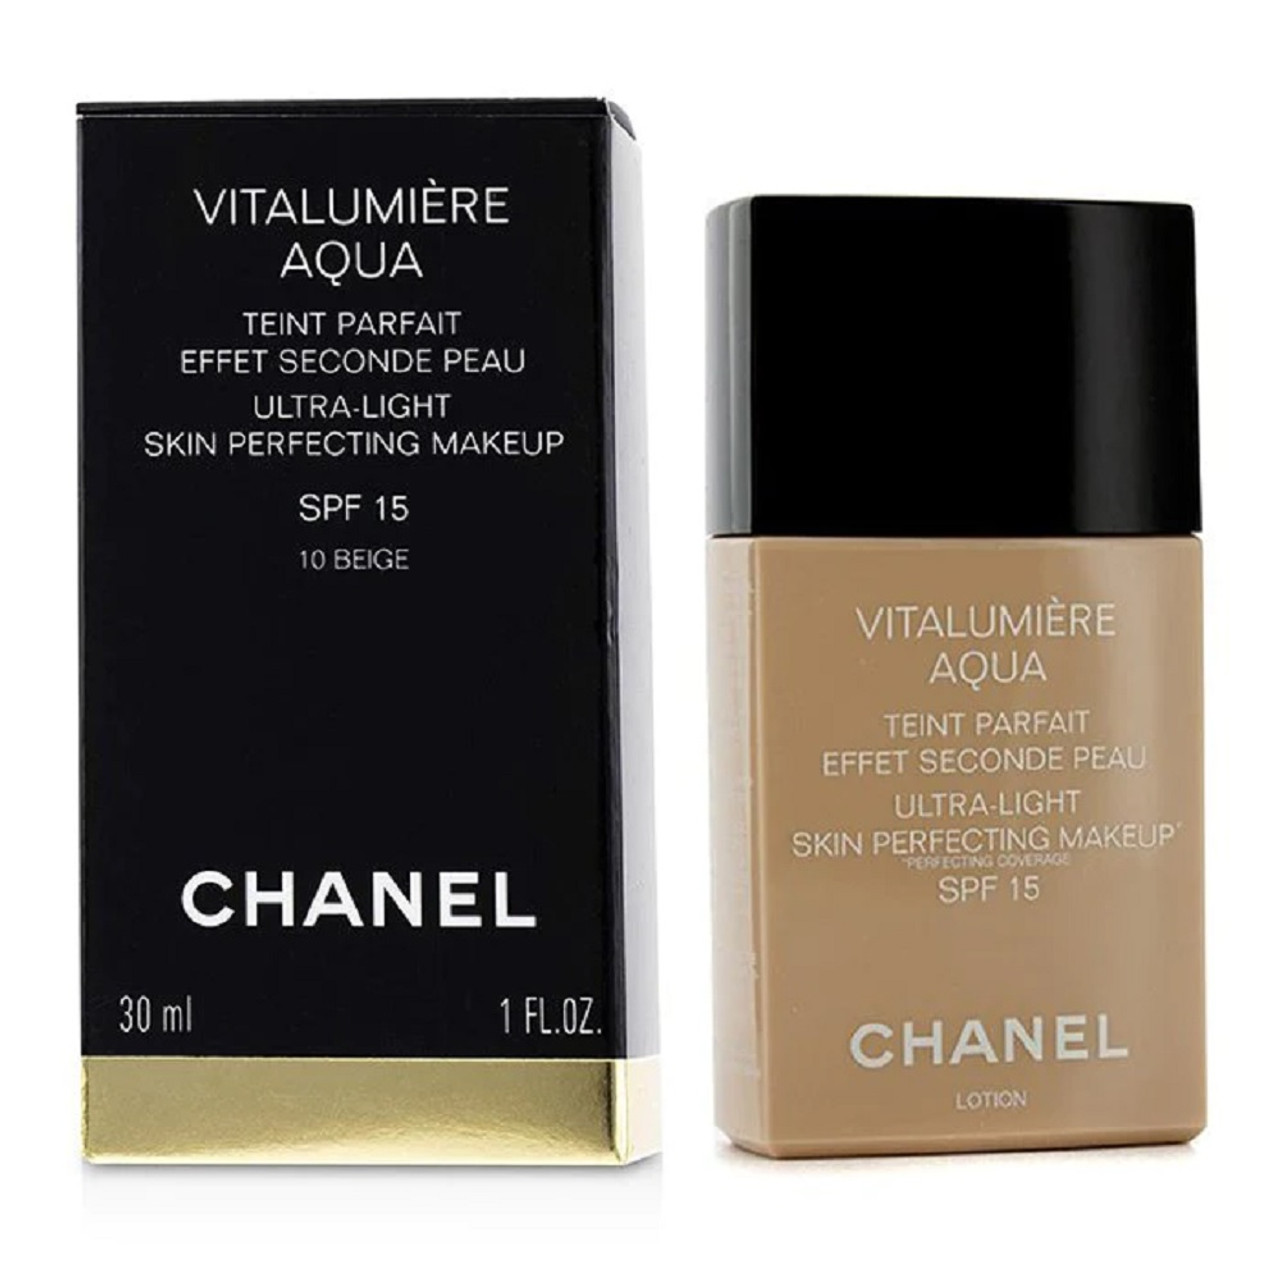 Get the best deals on Chanel Vitalumiere Aqua when you shop the